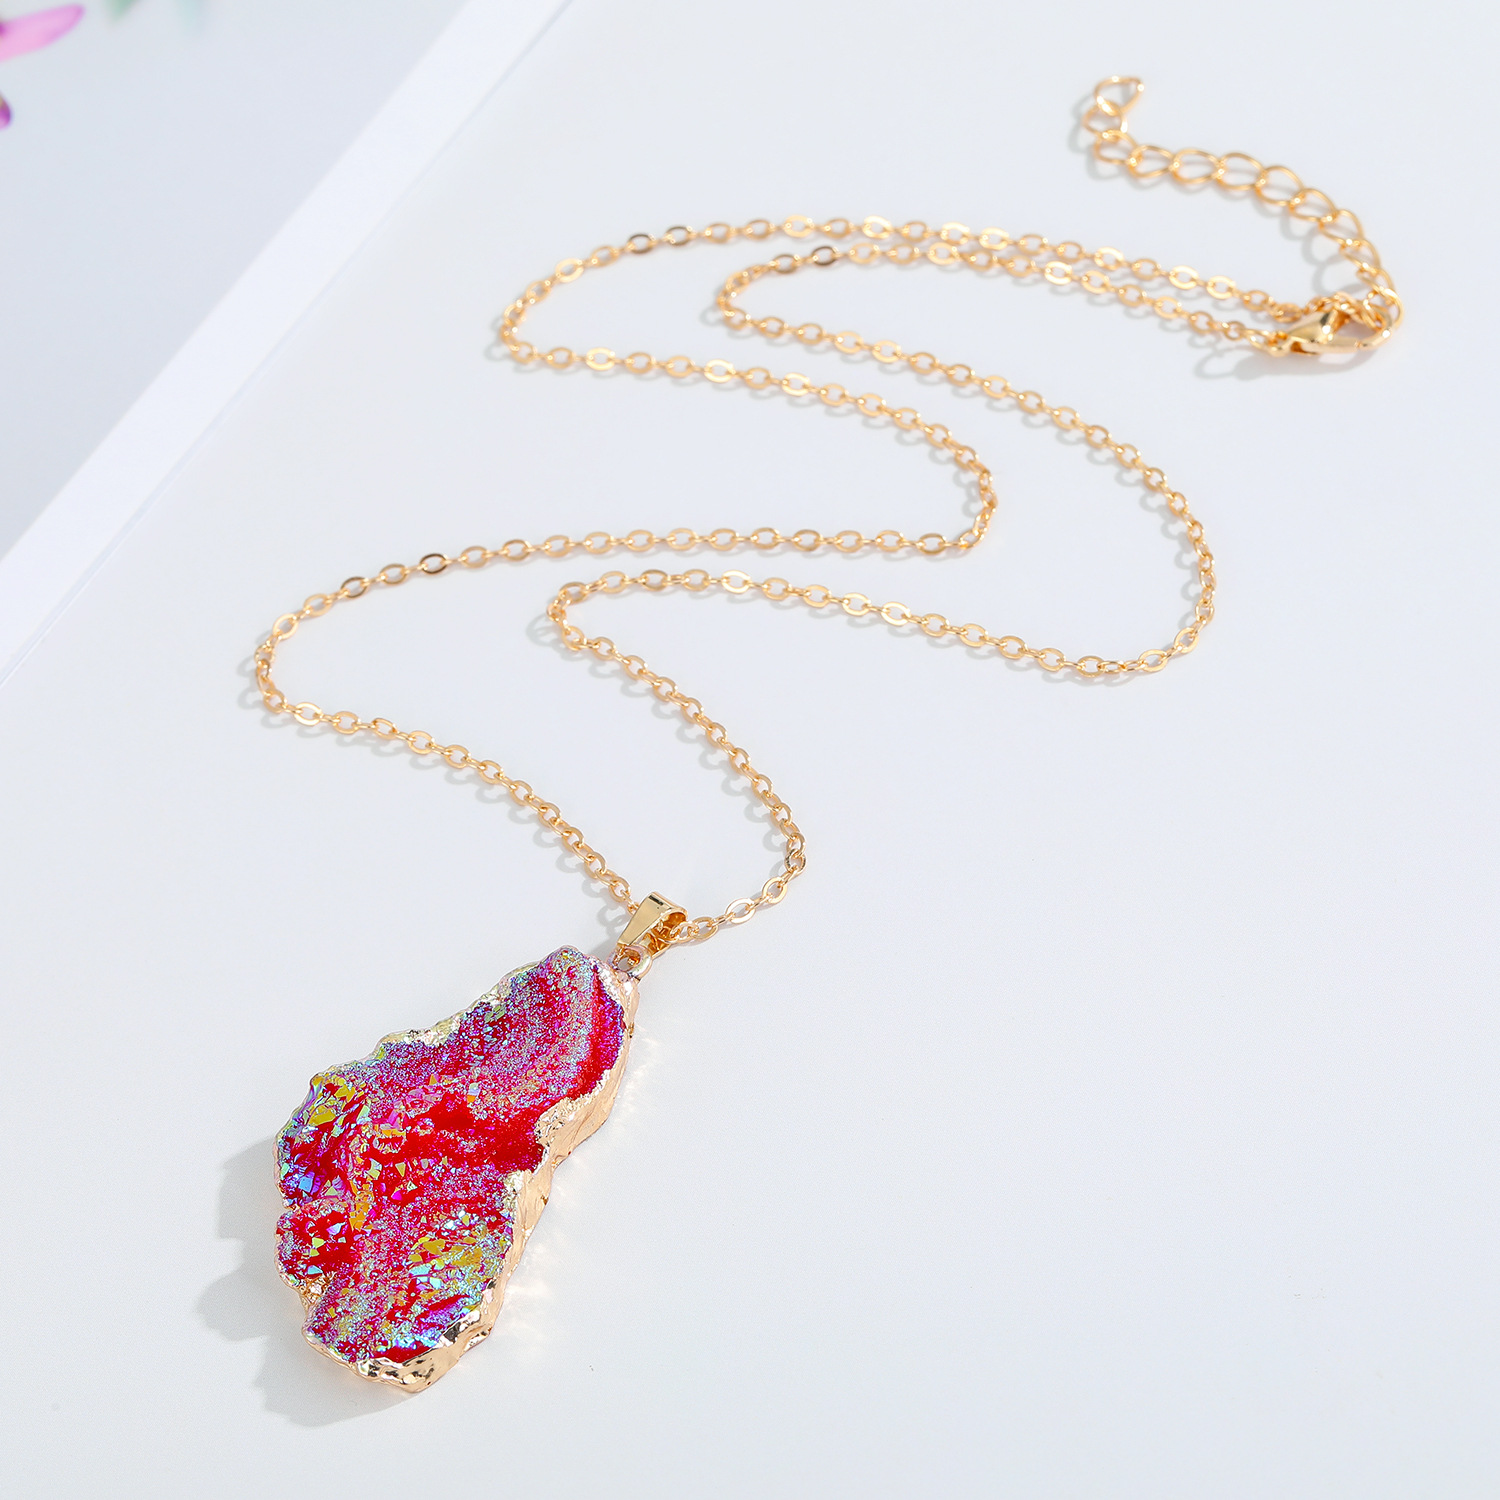 Fashion imitation natural stone necklace irregular resin agate piece pendant necklacepicture7